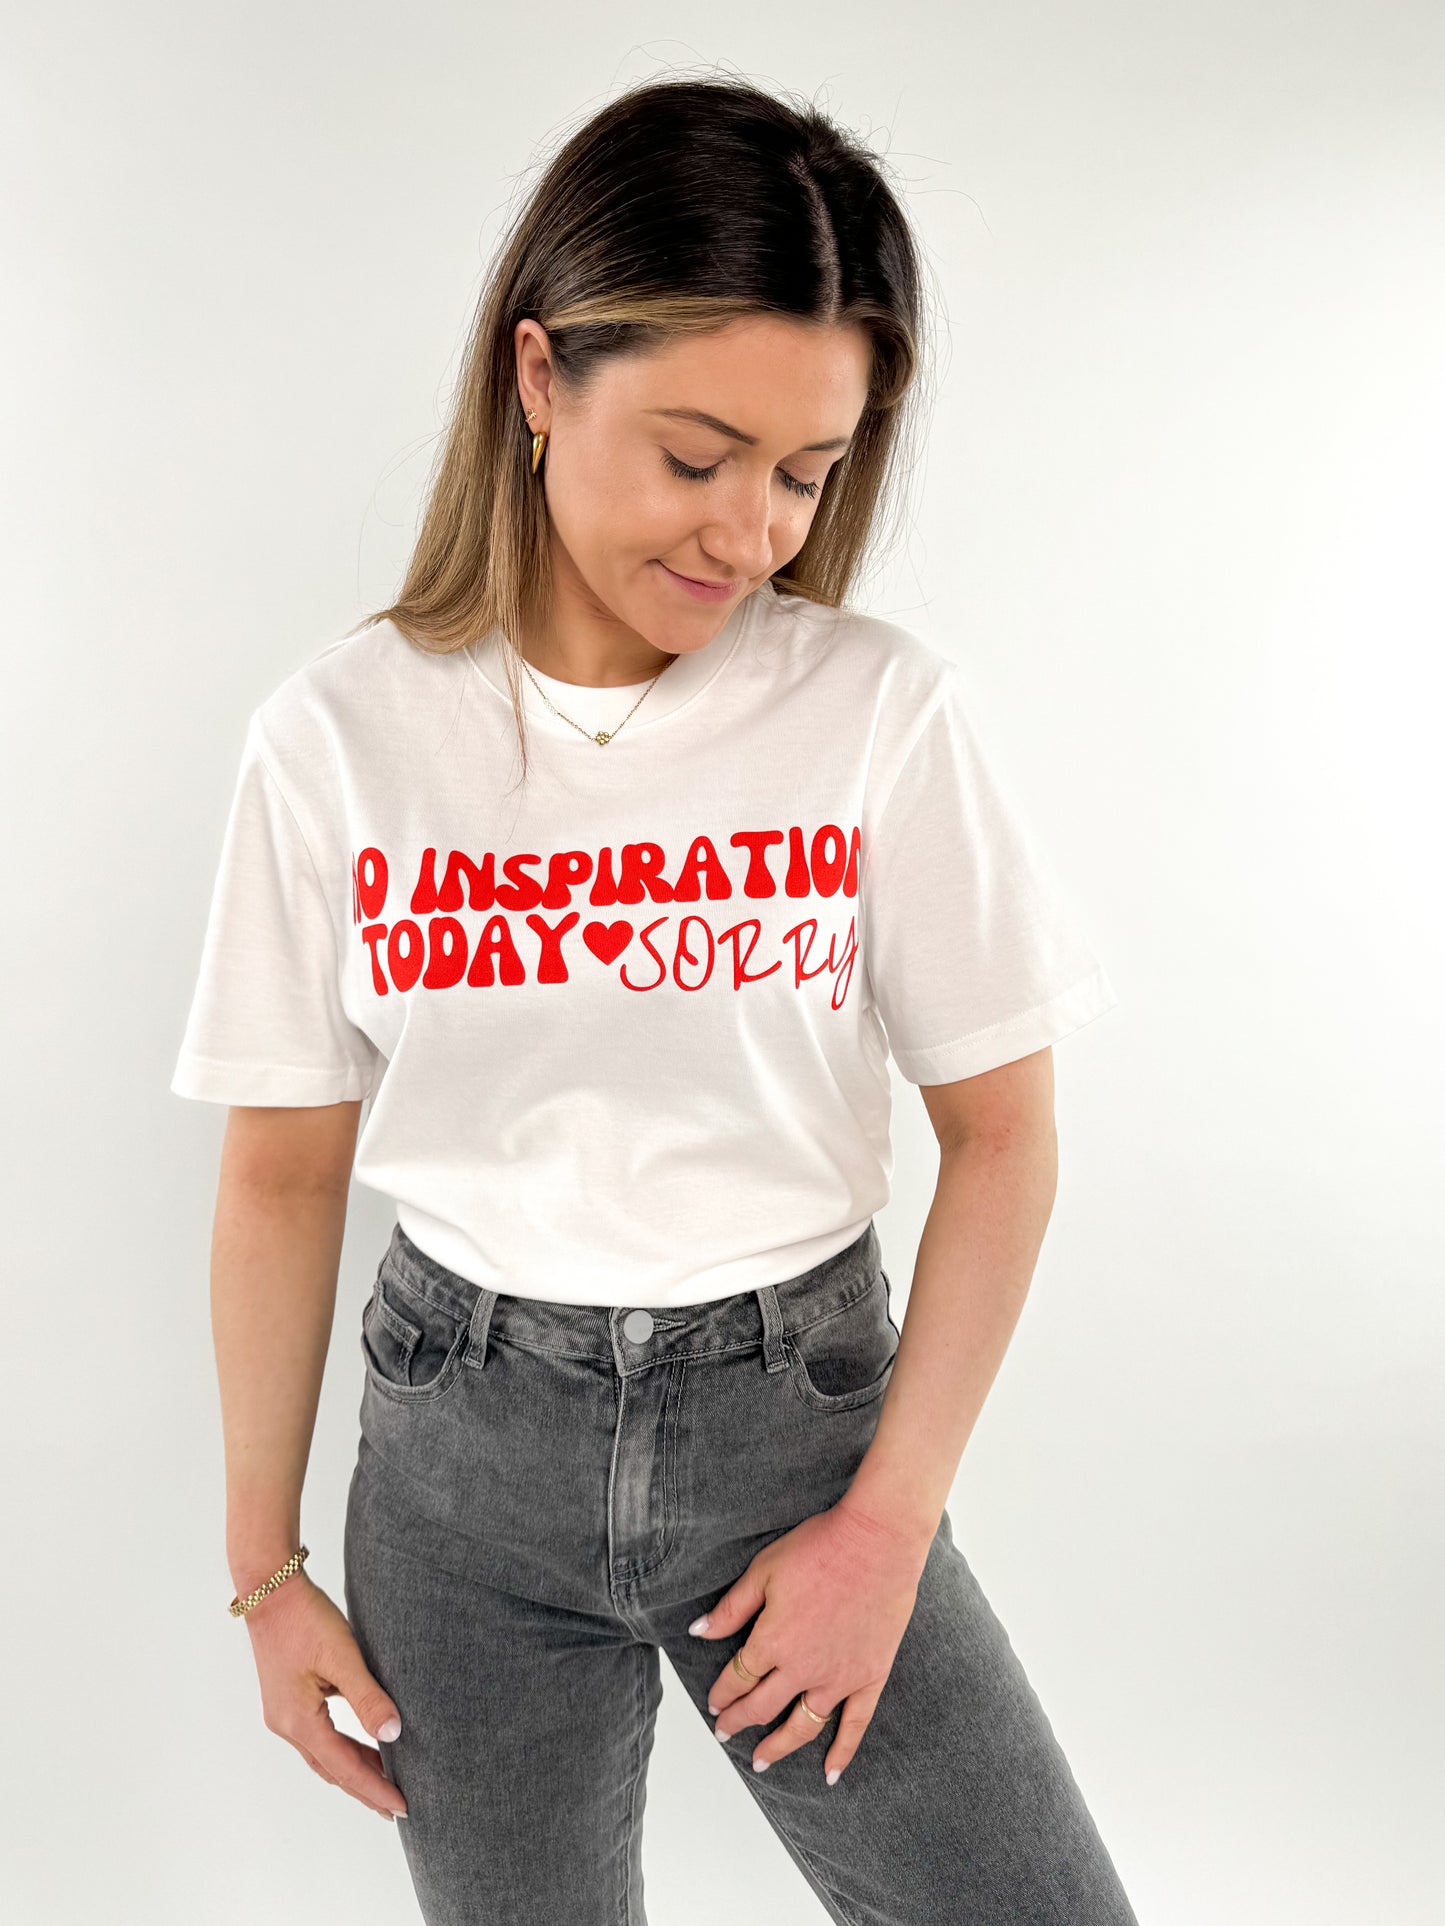 No Inspiration Today "SORRY " Shirt - weiß